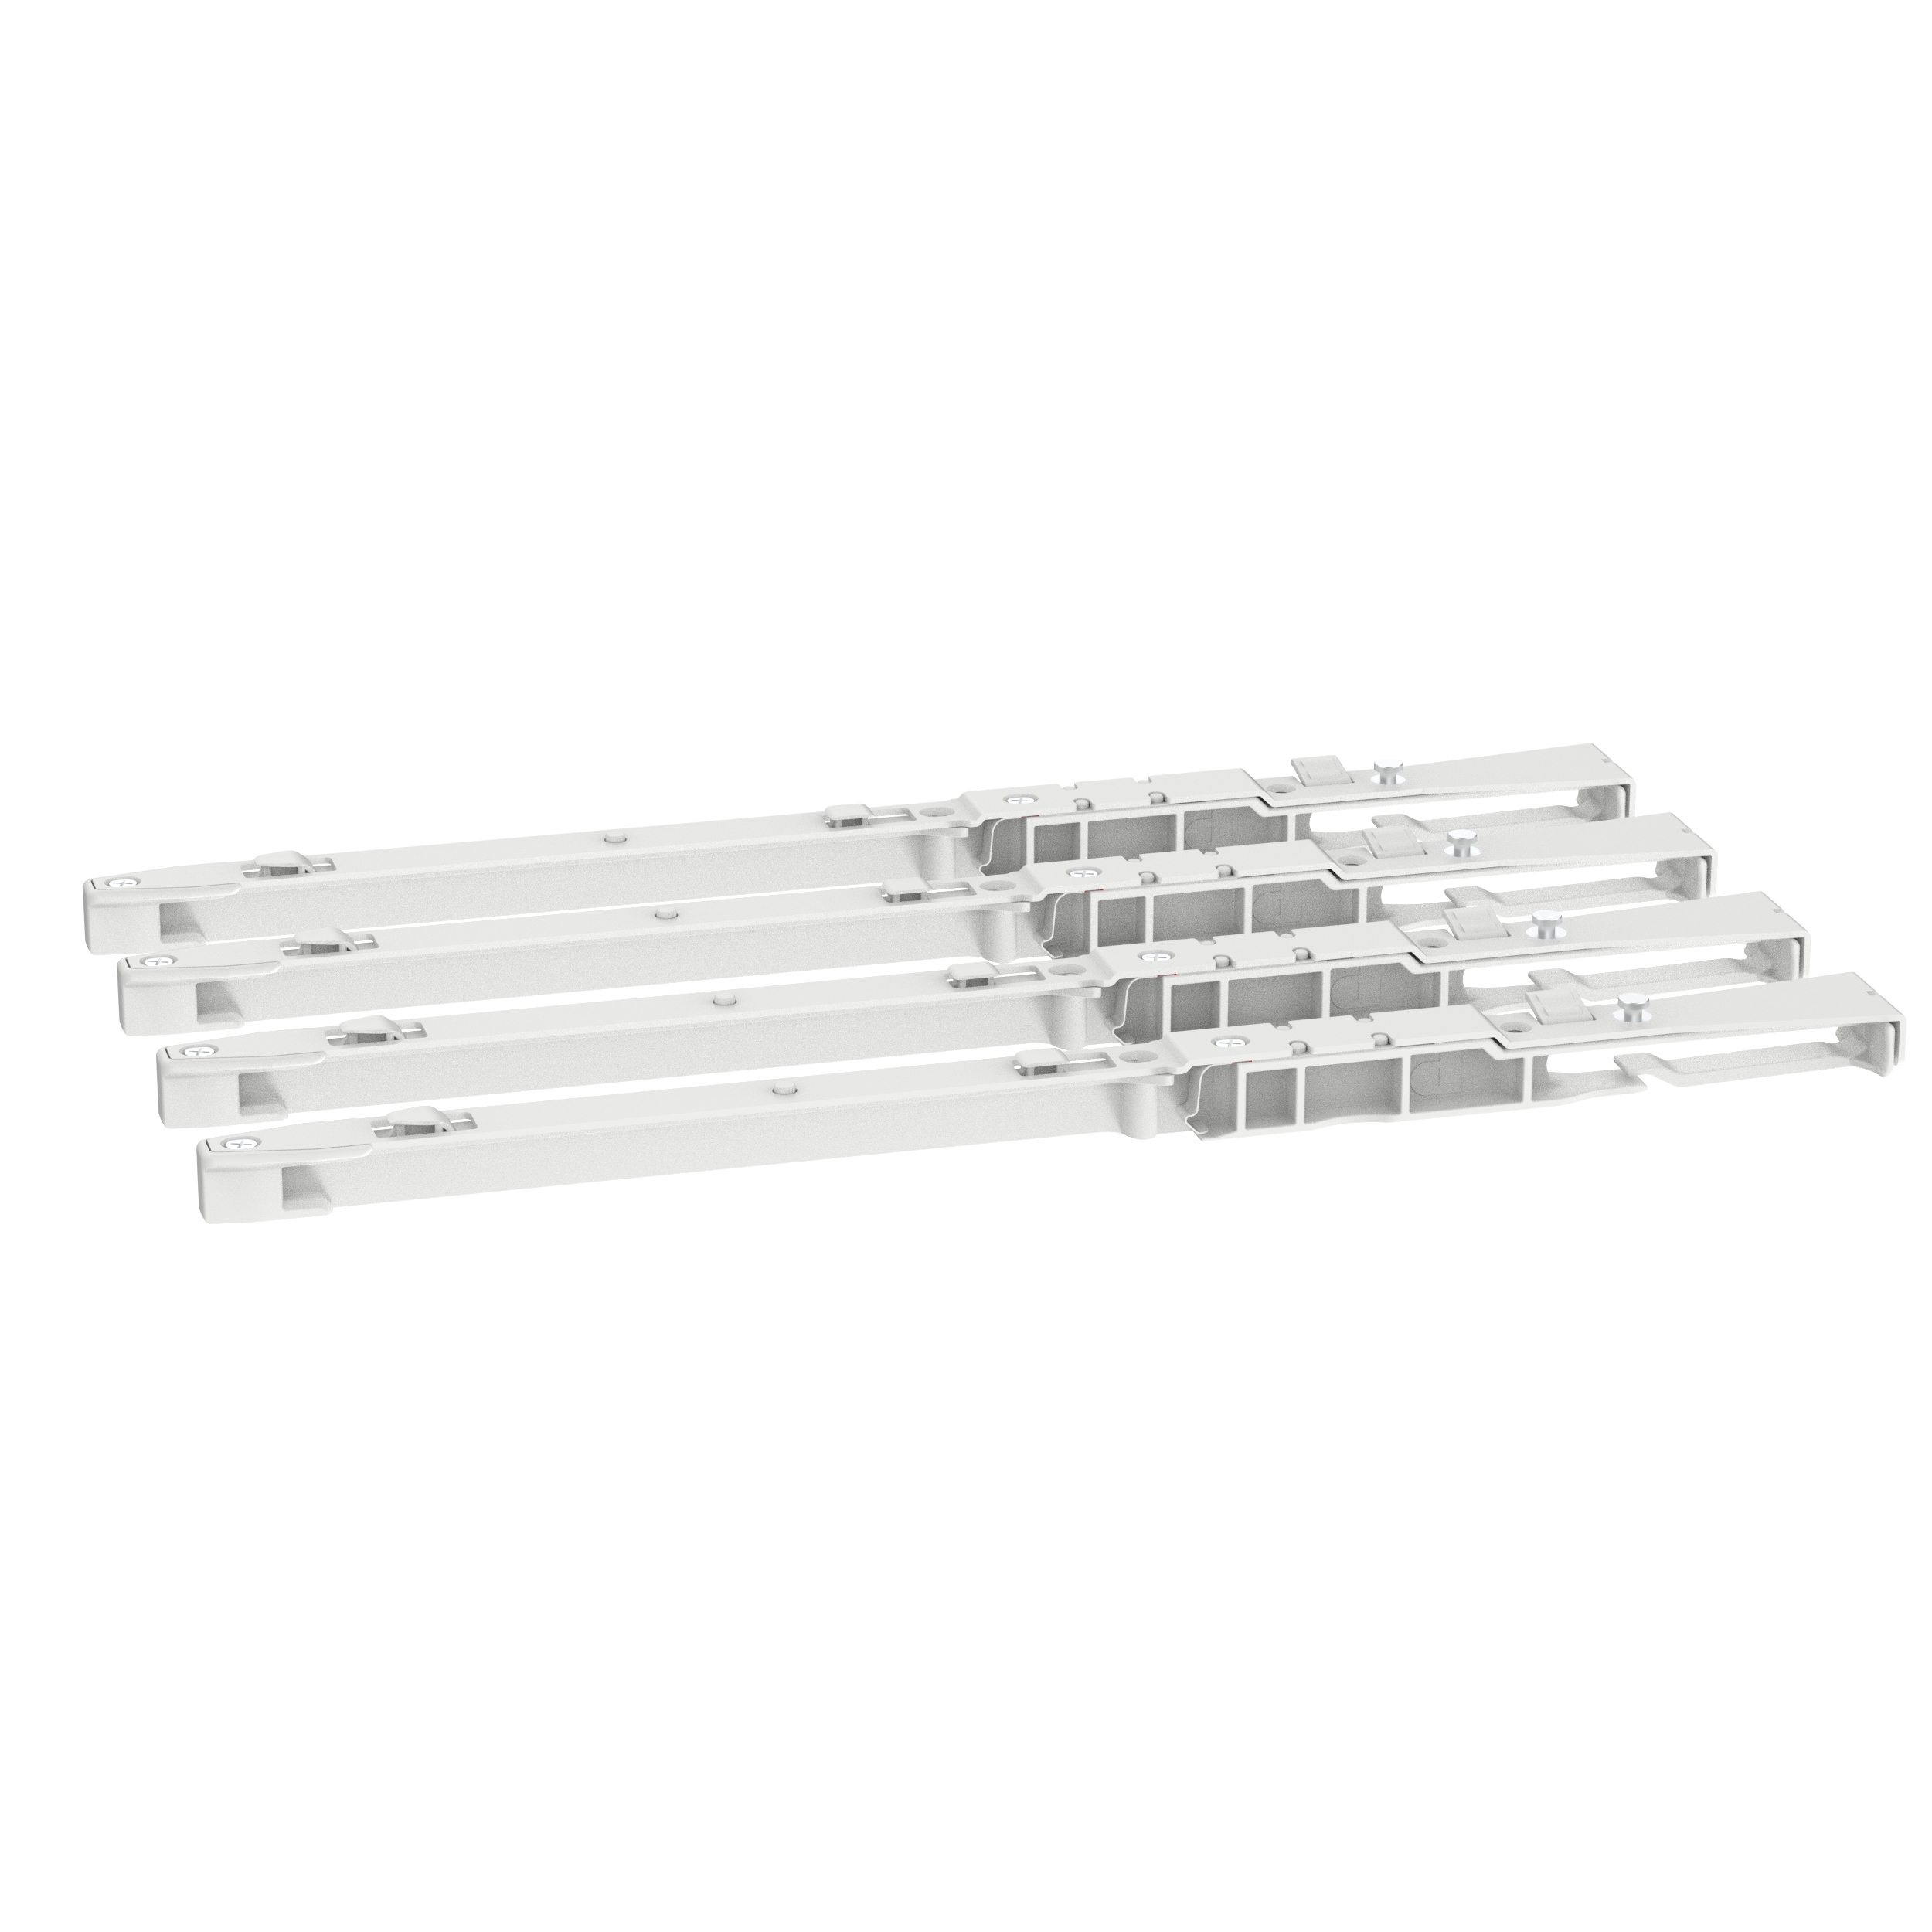 FlexCore Enclosure Tray Rail Kit, 4 Rails, White